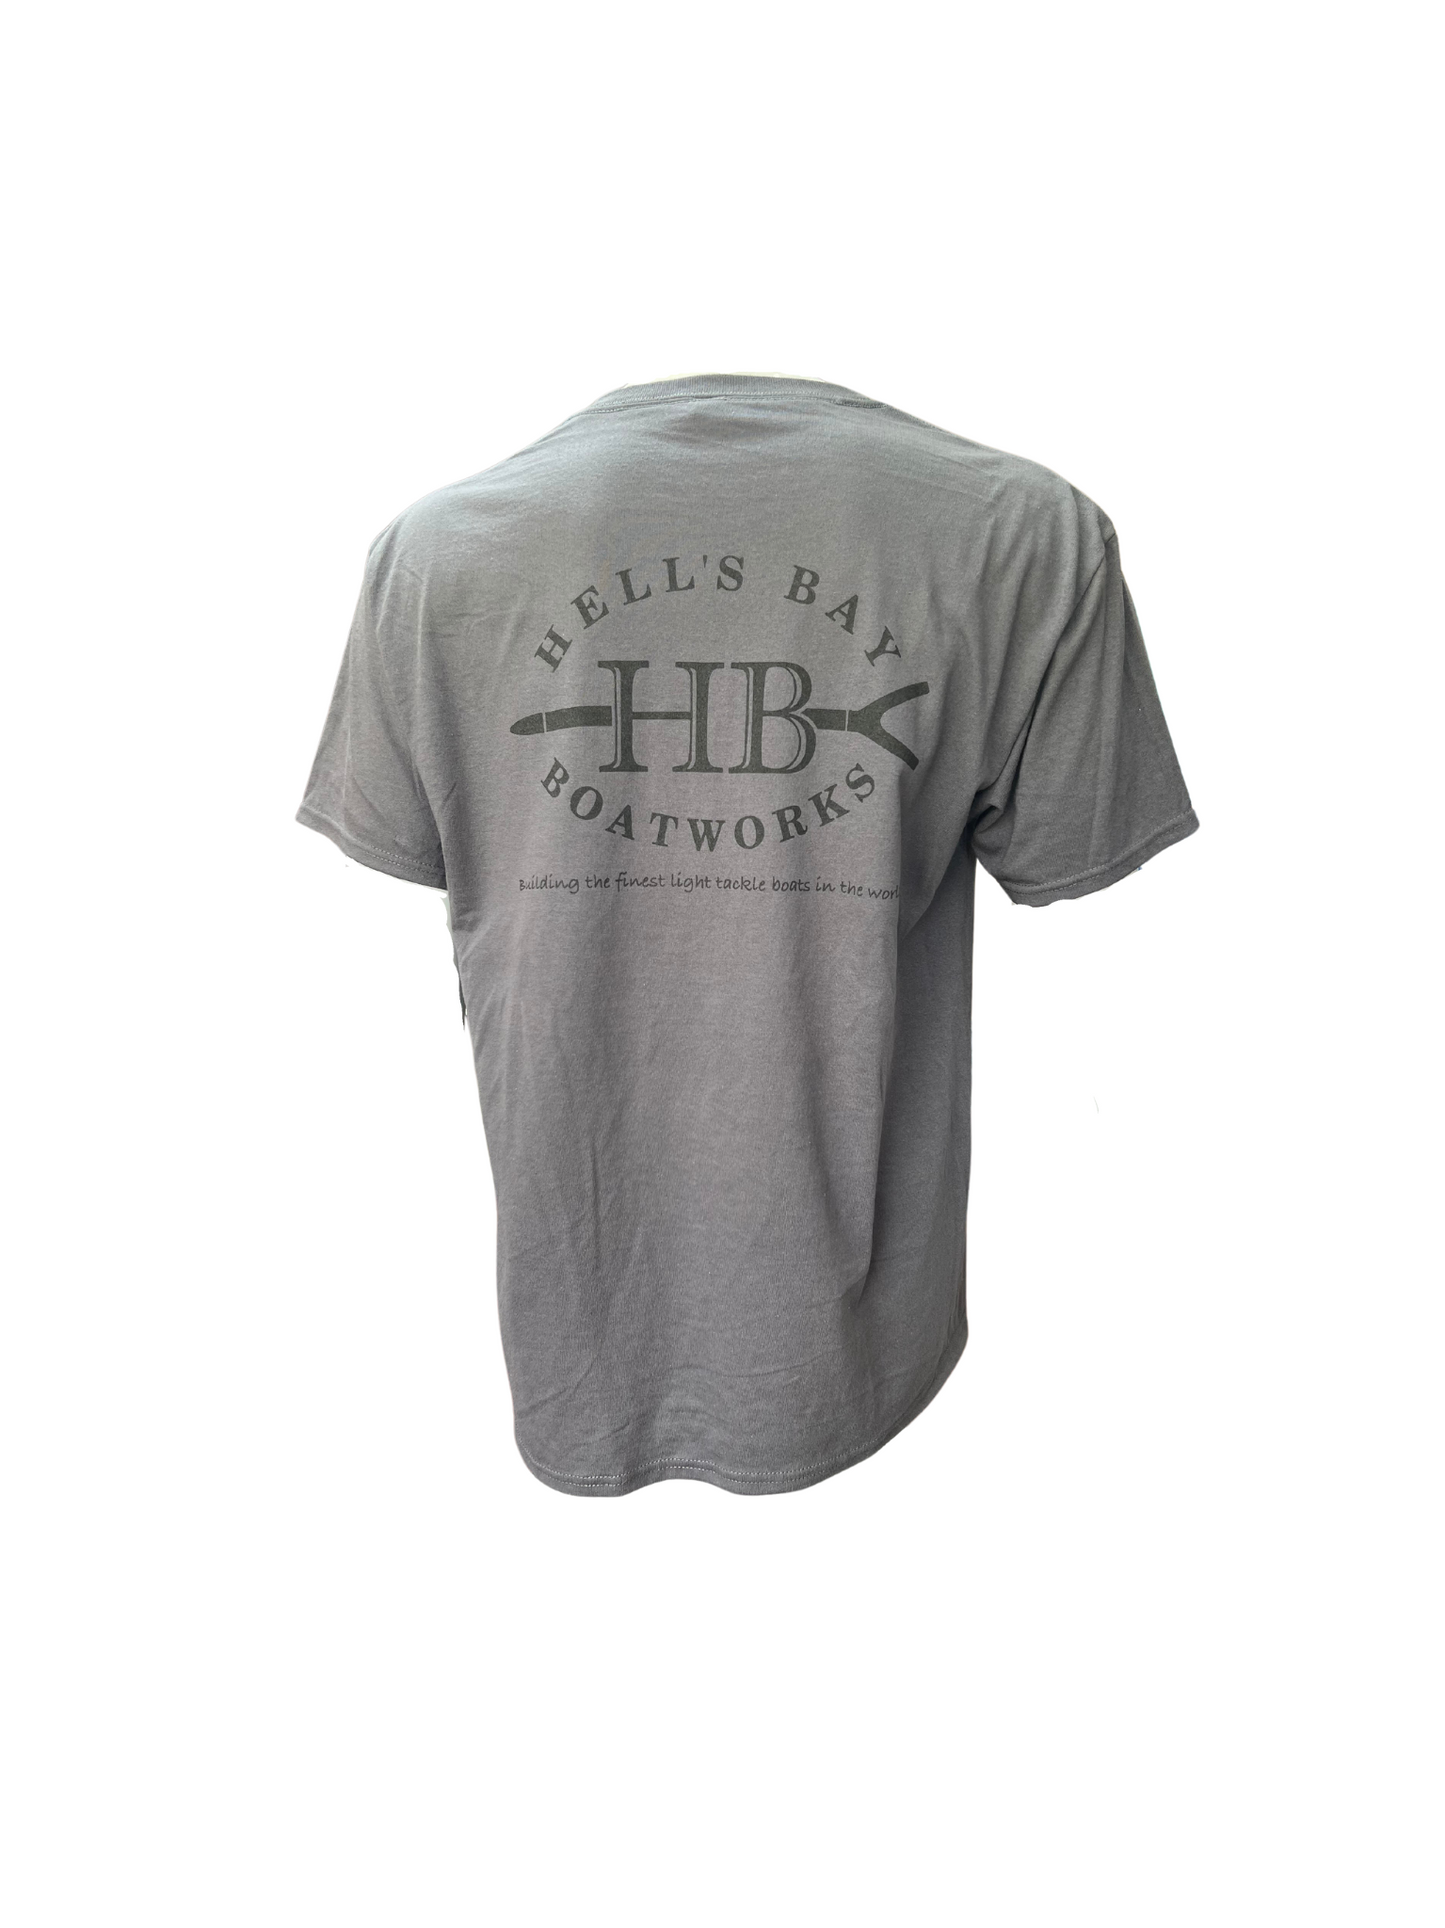 
                  
                    HB Logo Cotton S/S t-shirt - Charcoal Grey
                  
                